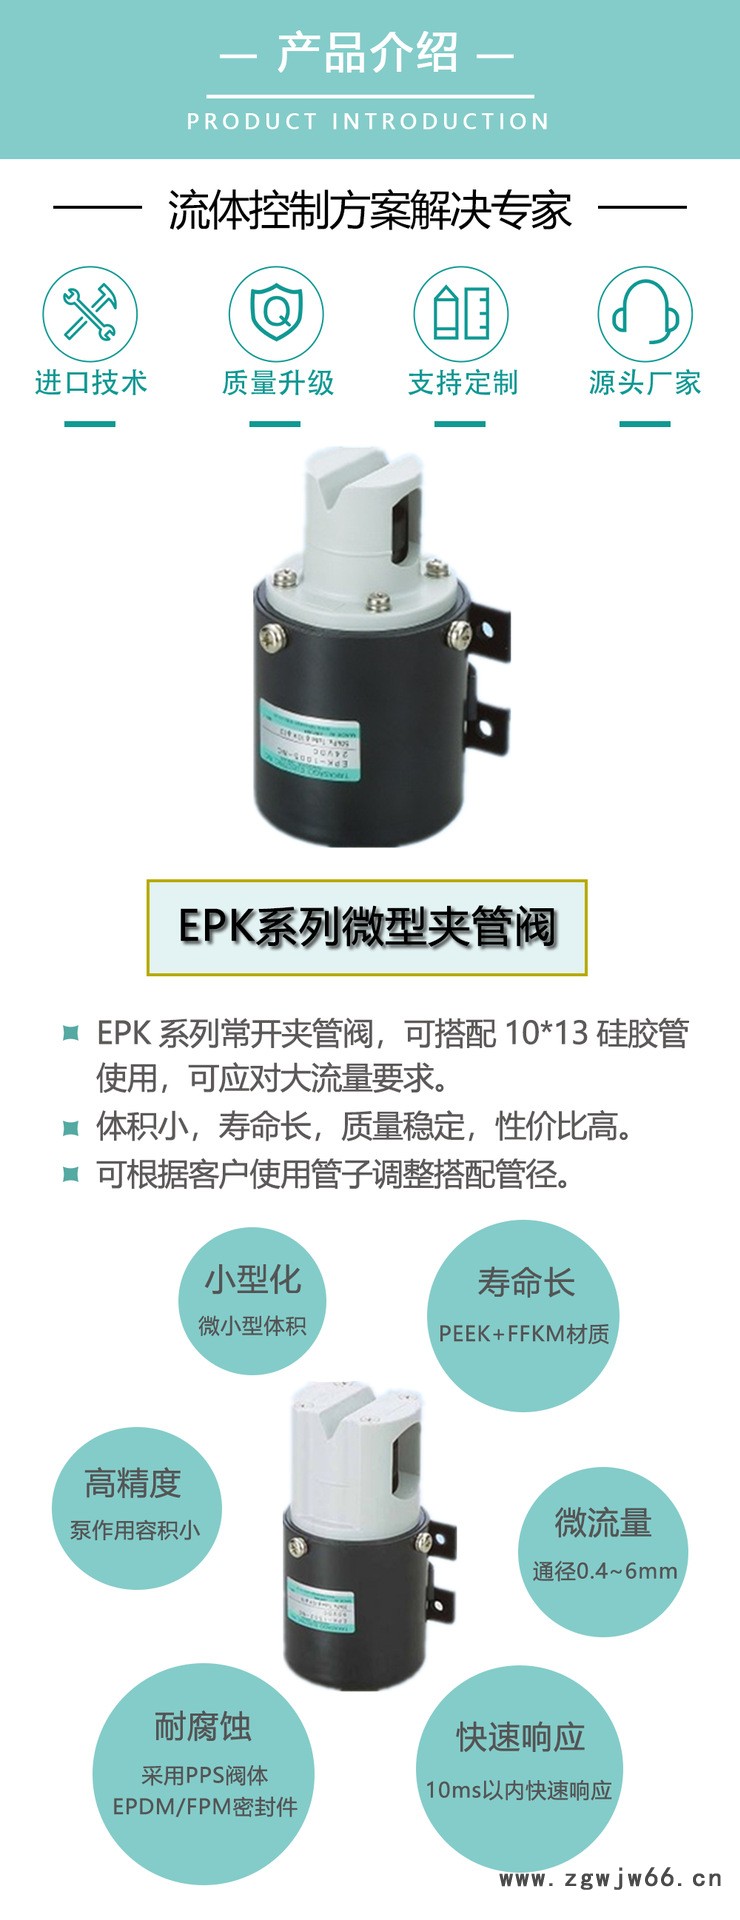 EPK-产品介绍